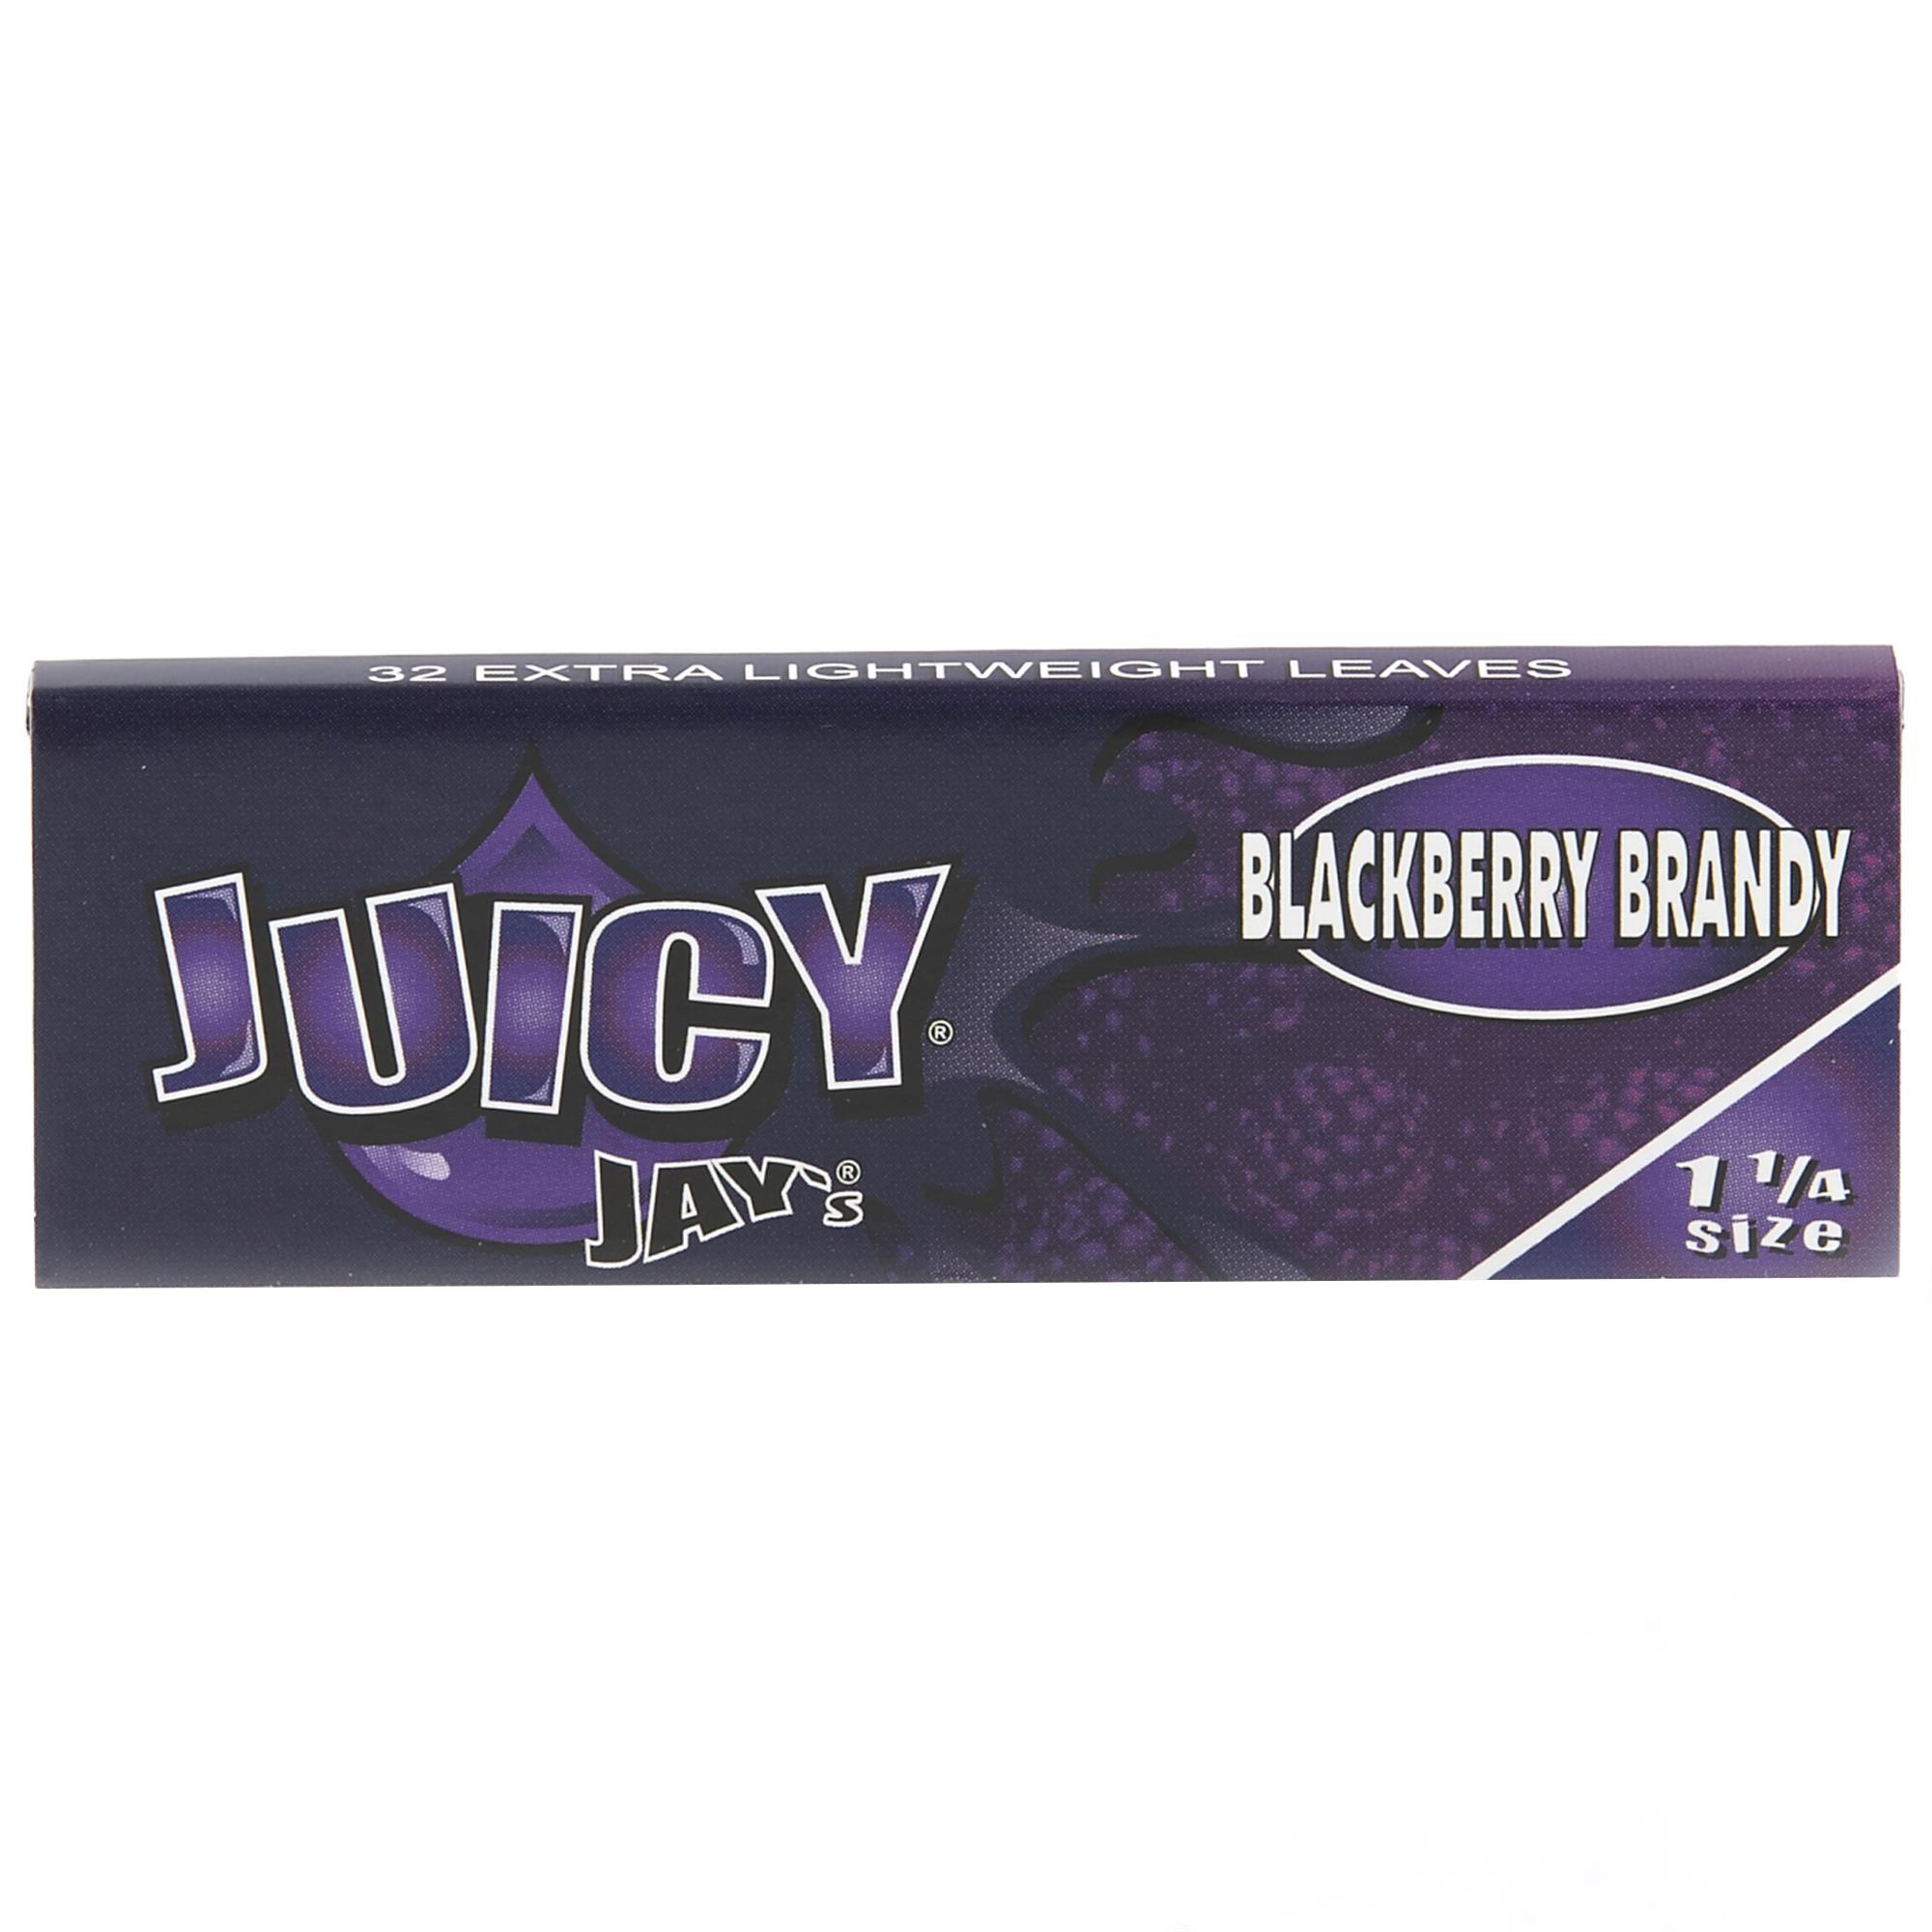 JUICY JAYS BLACKBERRY BRANDY 1/4